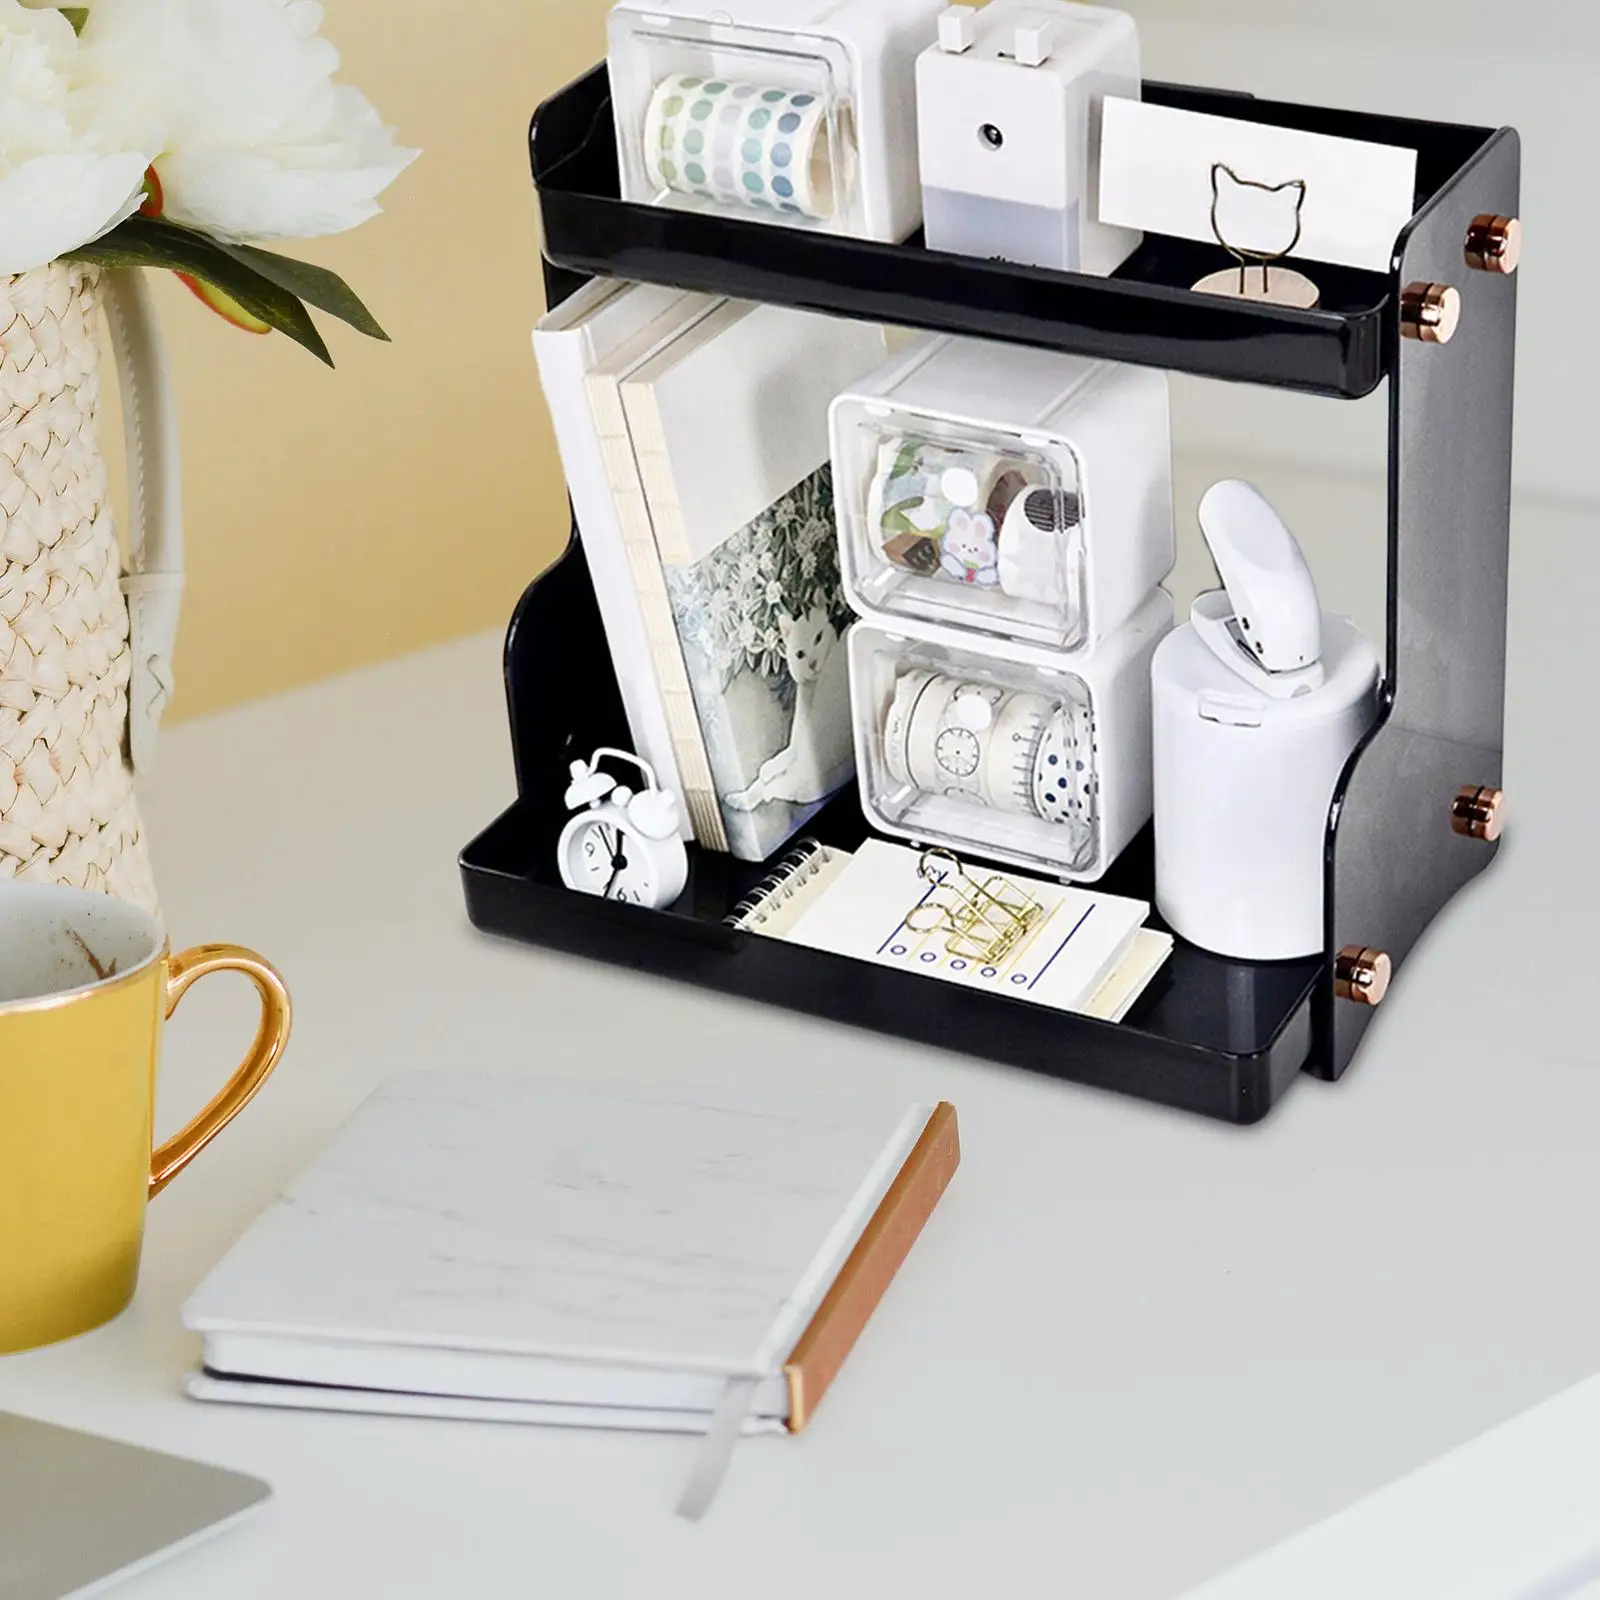 Makeup Display Stationery Supplies Stand Desktop Organizer Kitchen Spice Rack for Bedroom Household Livingroom Bathroom Office